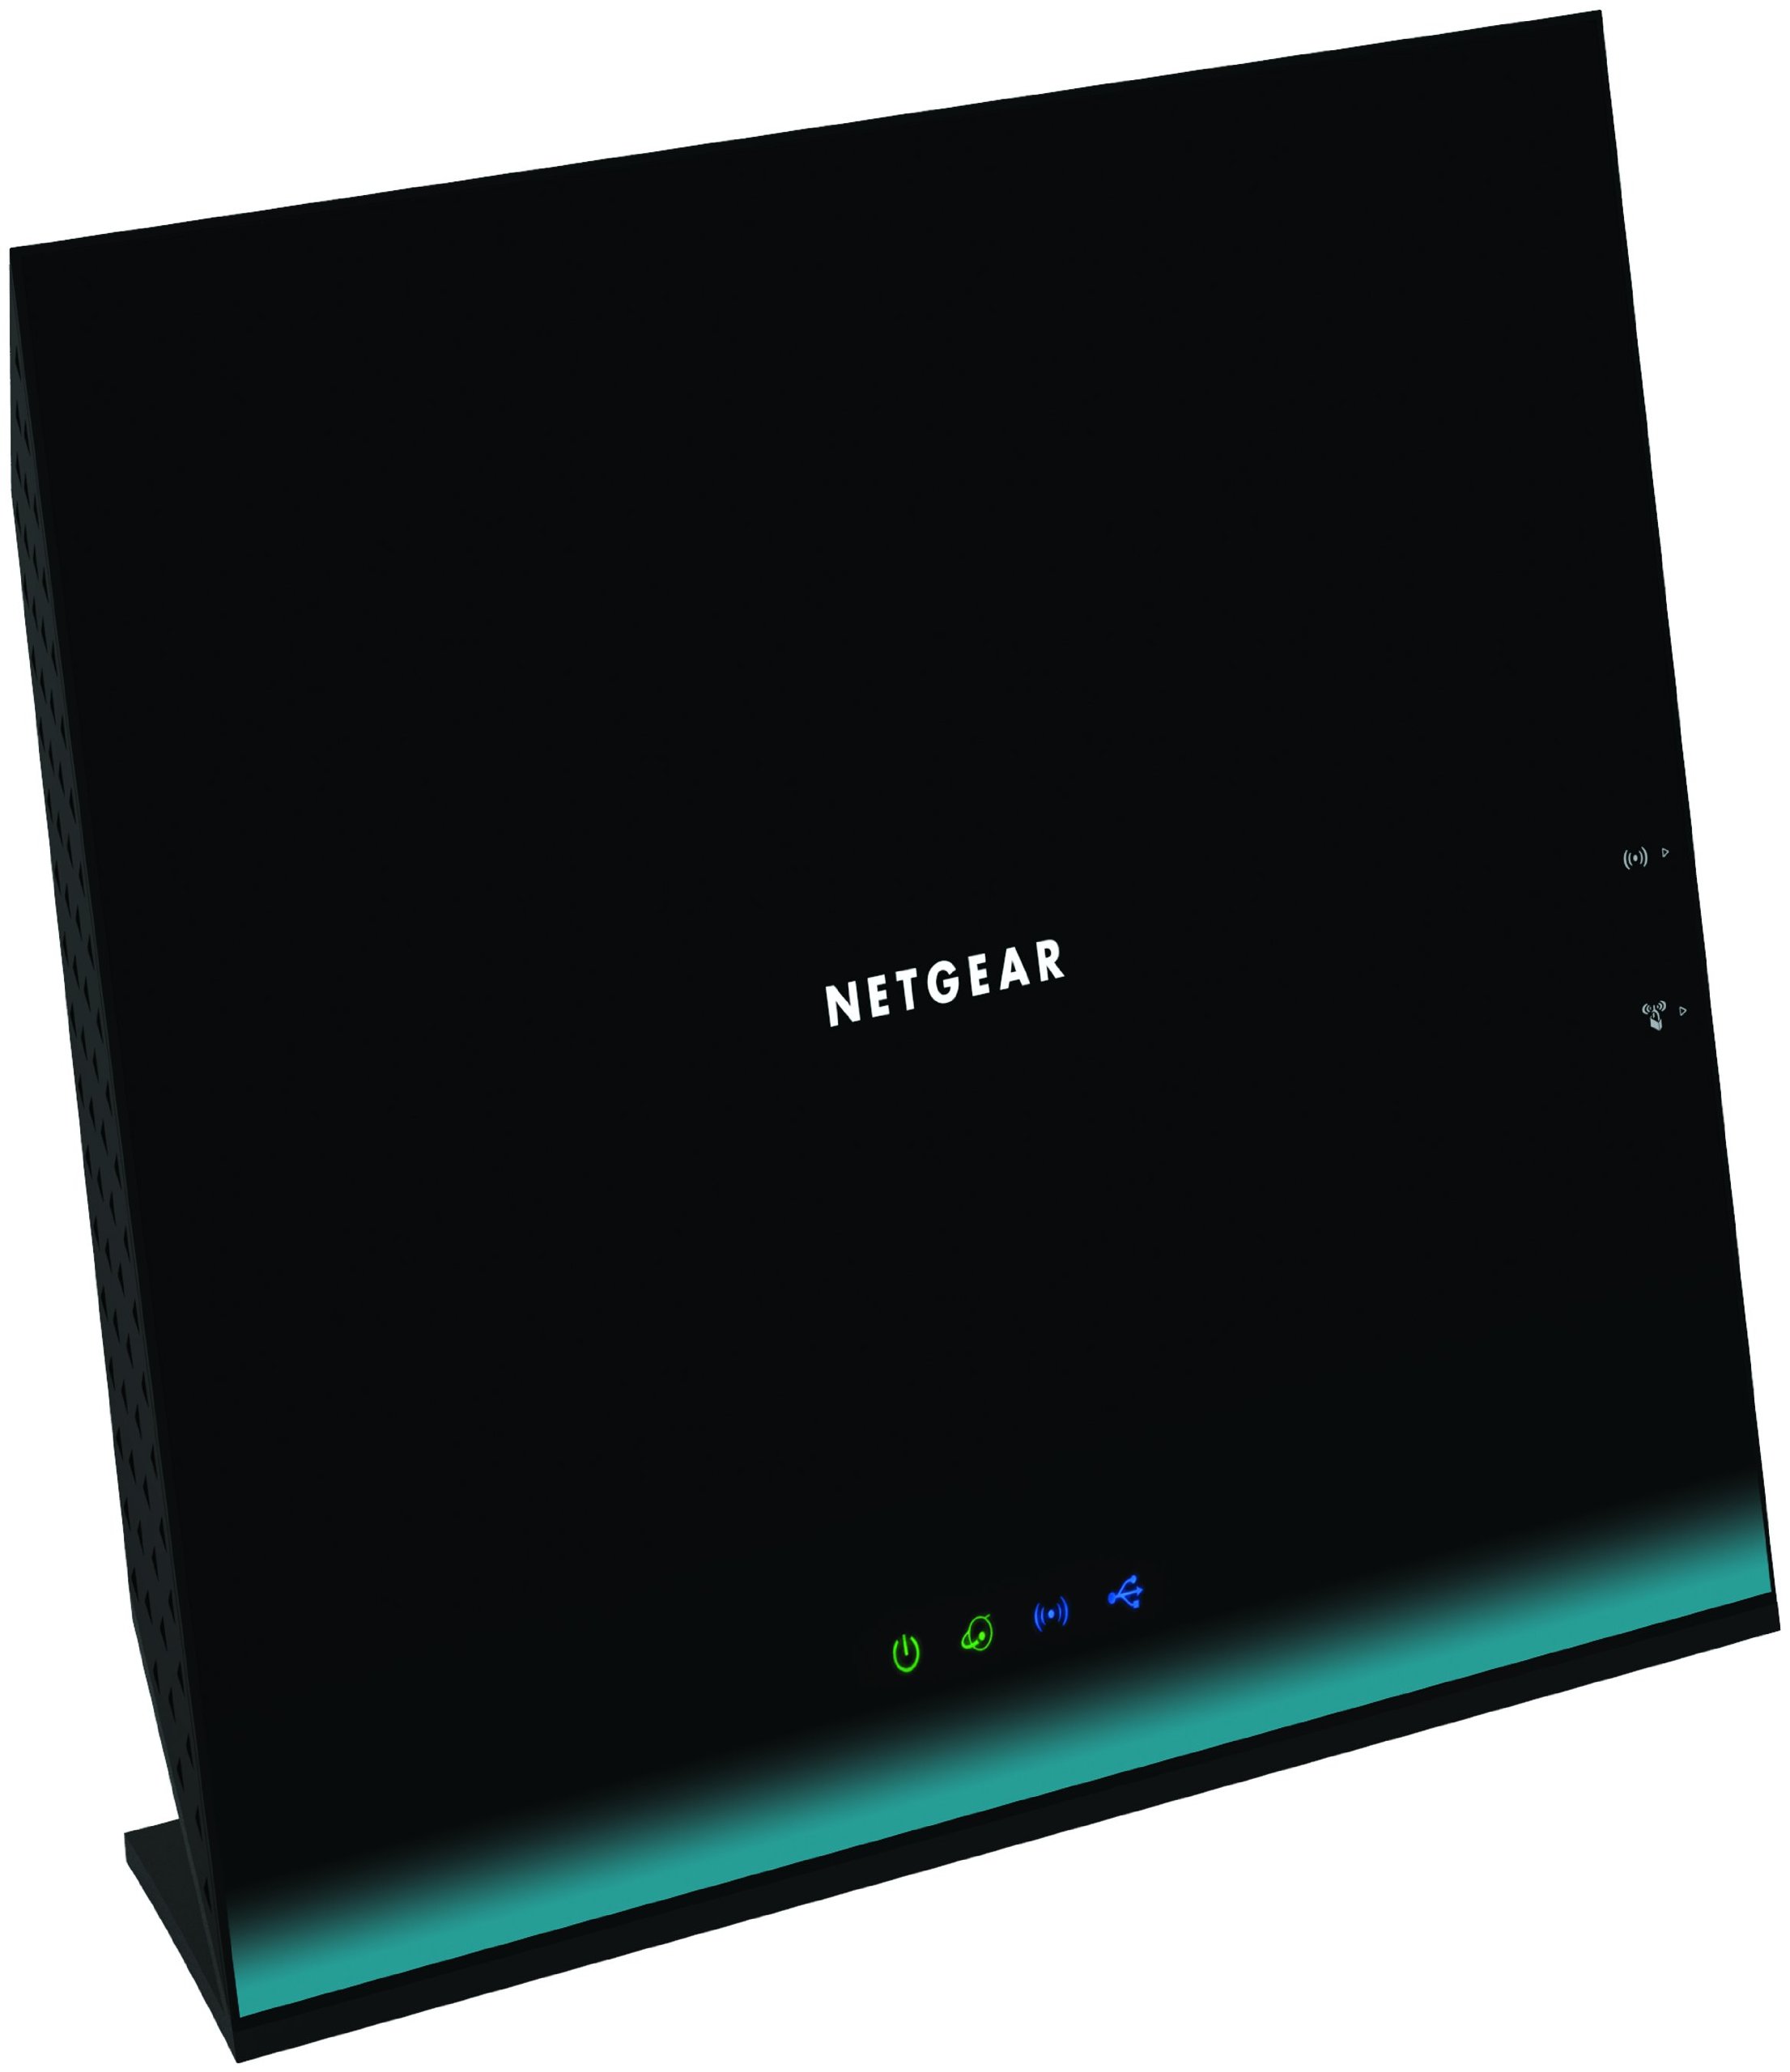 NETGEAR AC1200 Dual Band Wi-Fi Router Fast Ethernet w/USB 2.0 (R6100-100PAS)